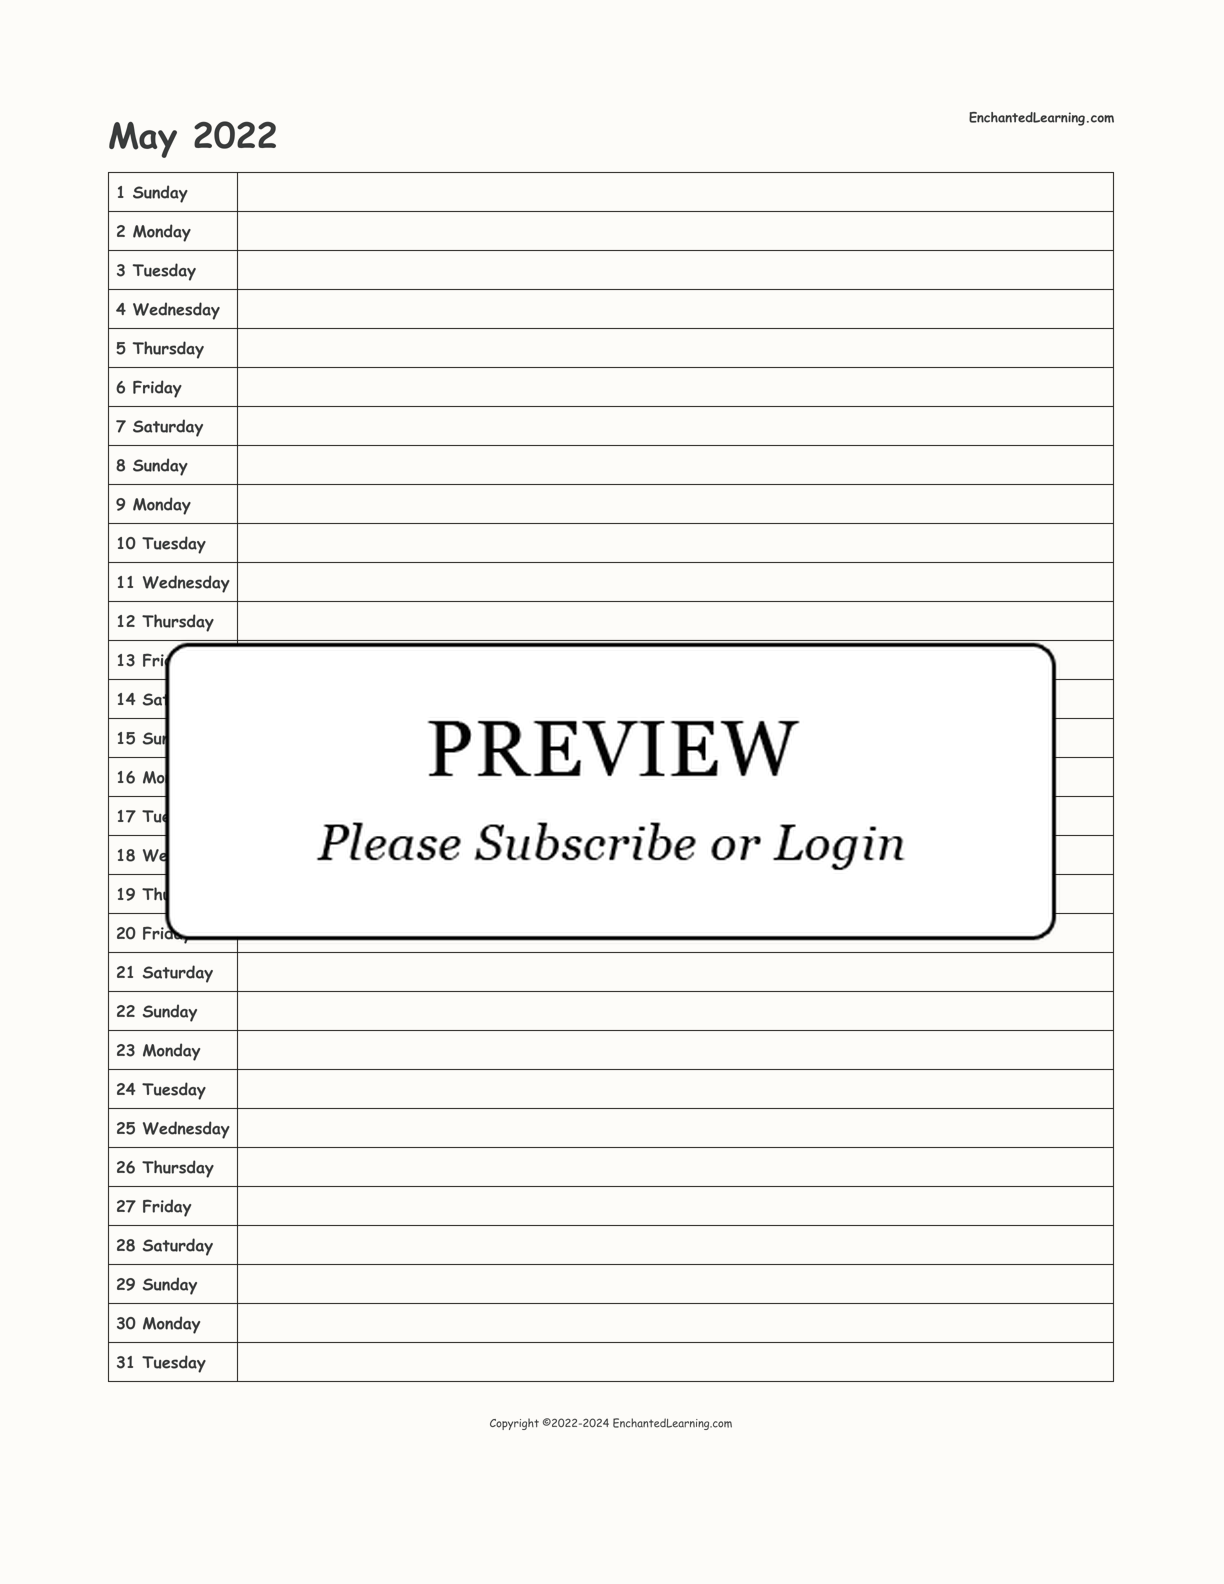 May 2022 Calendar interactive printout page 1